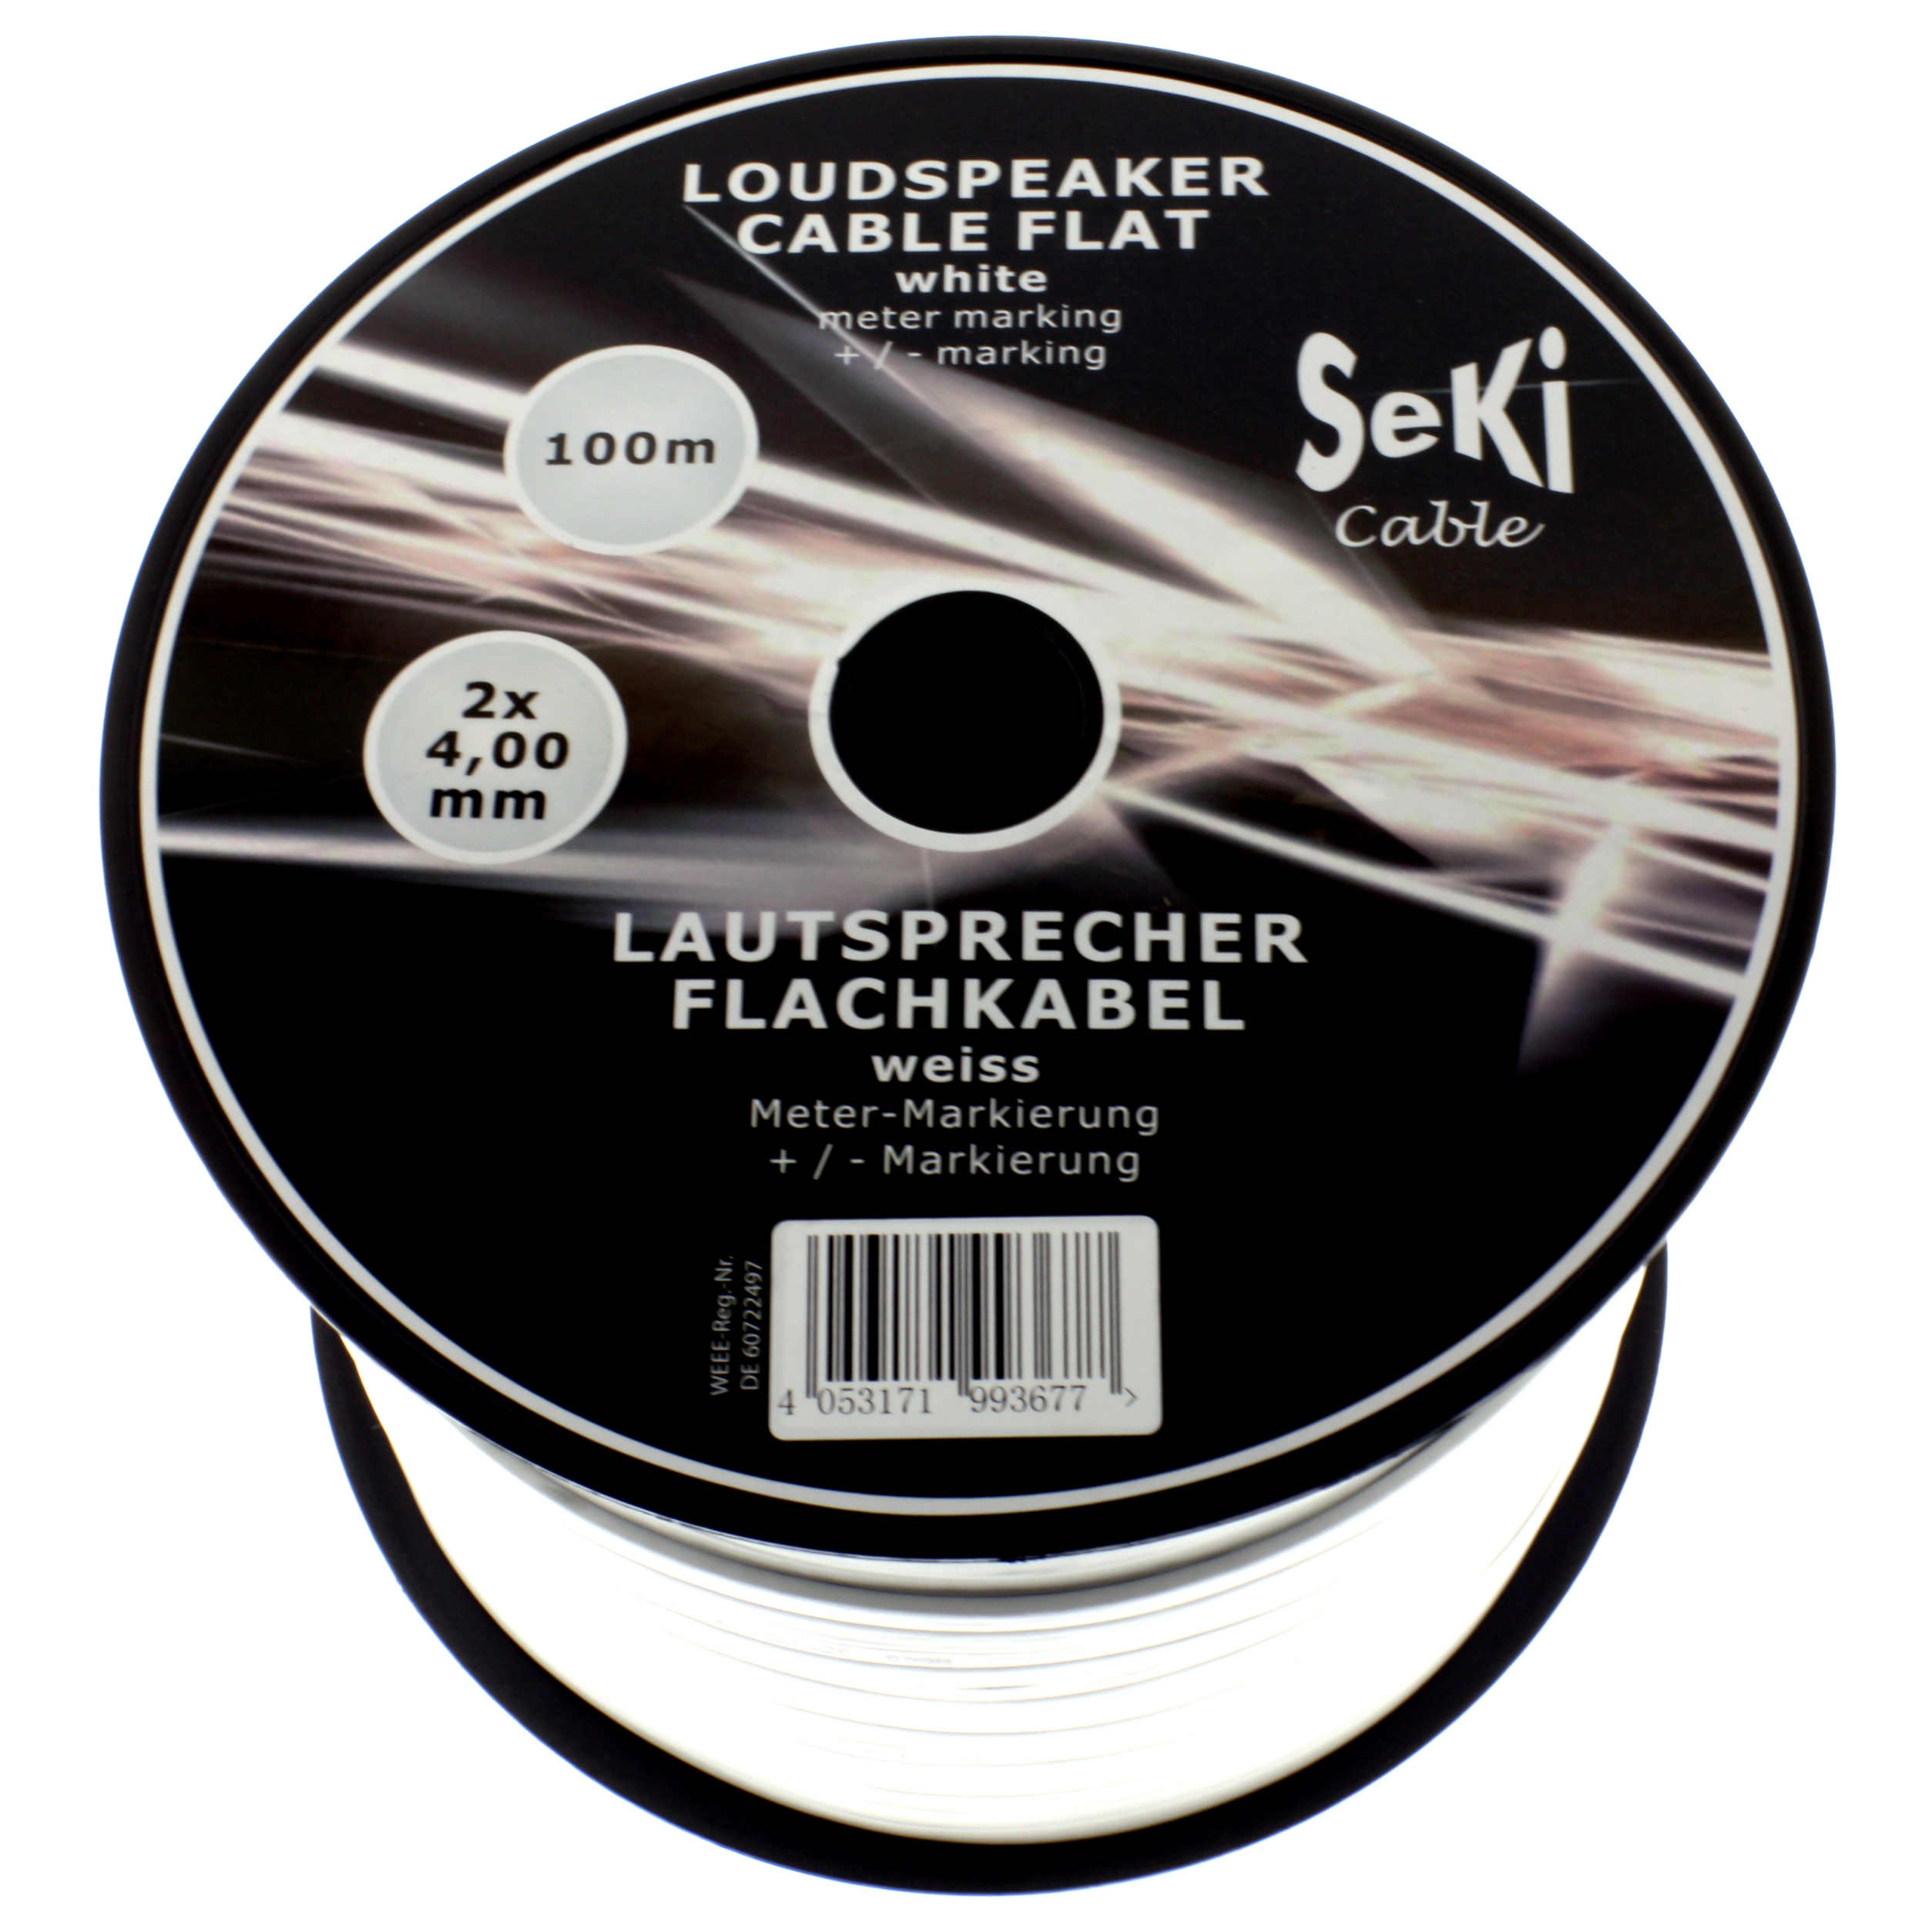 Loudspeaker cable FLAT 4,00mm, CCA, 100M, white